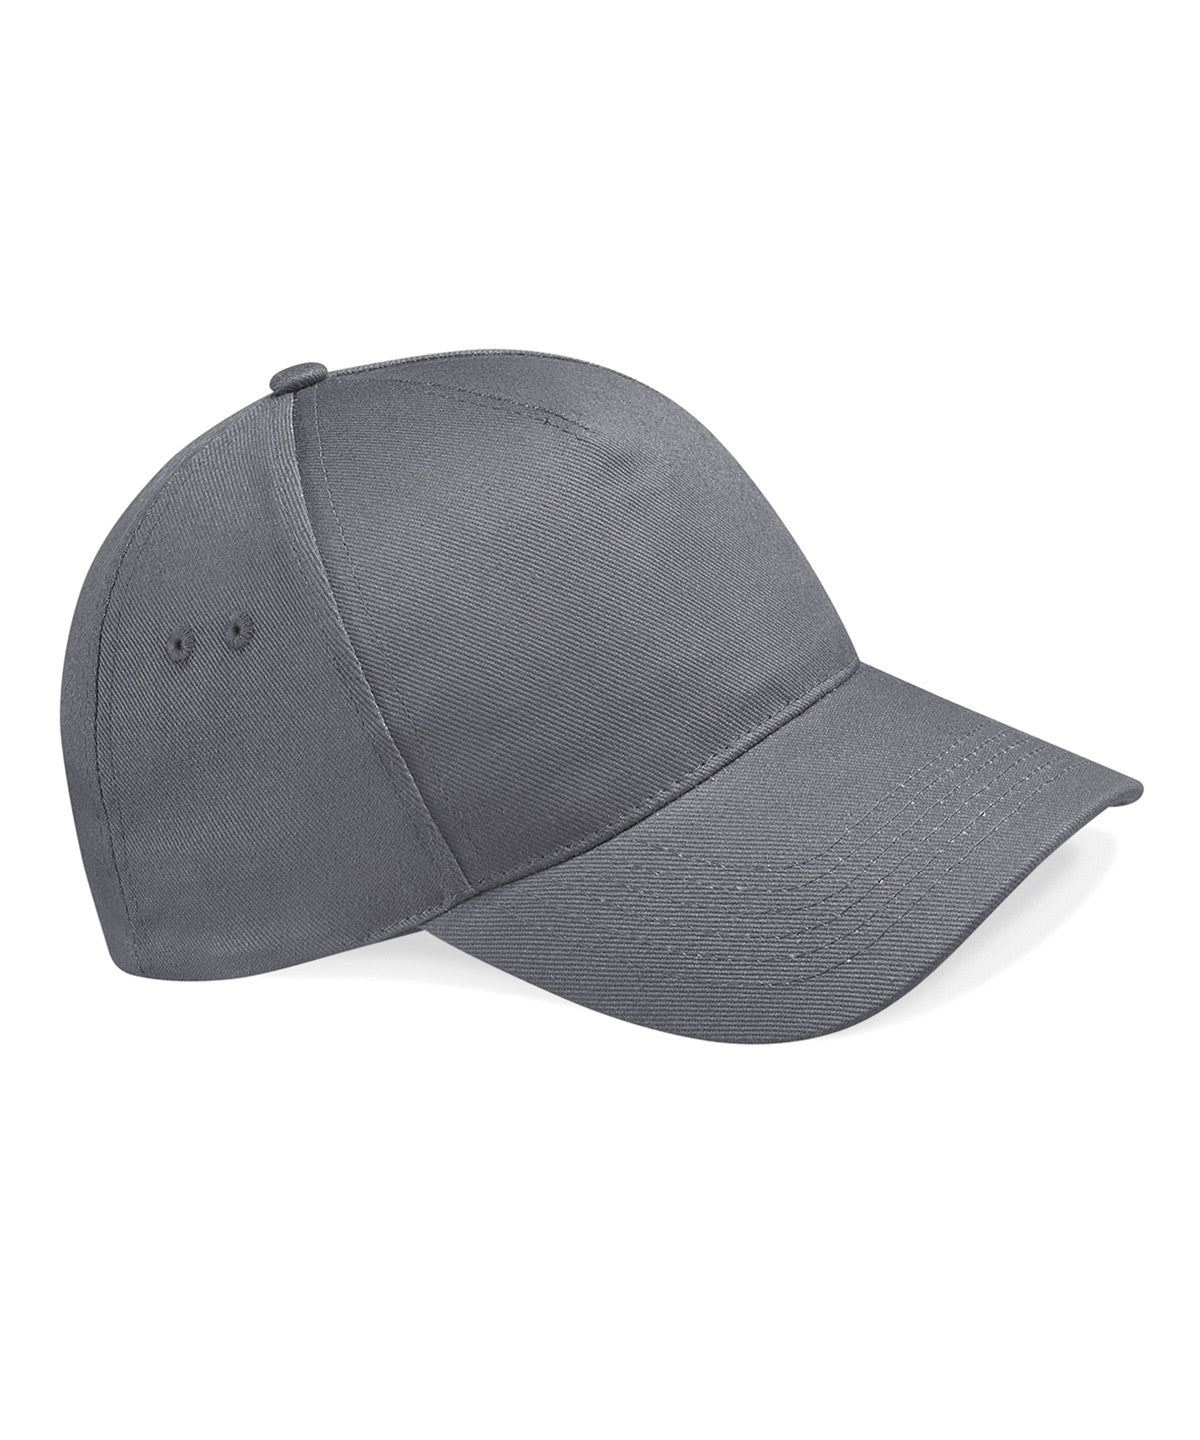 Personalised Caps - Dark Grey Beechfield Ultimate 5-panel cap